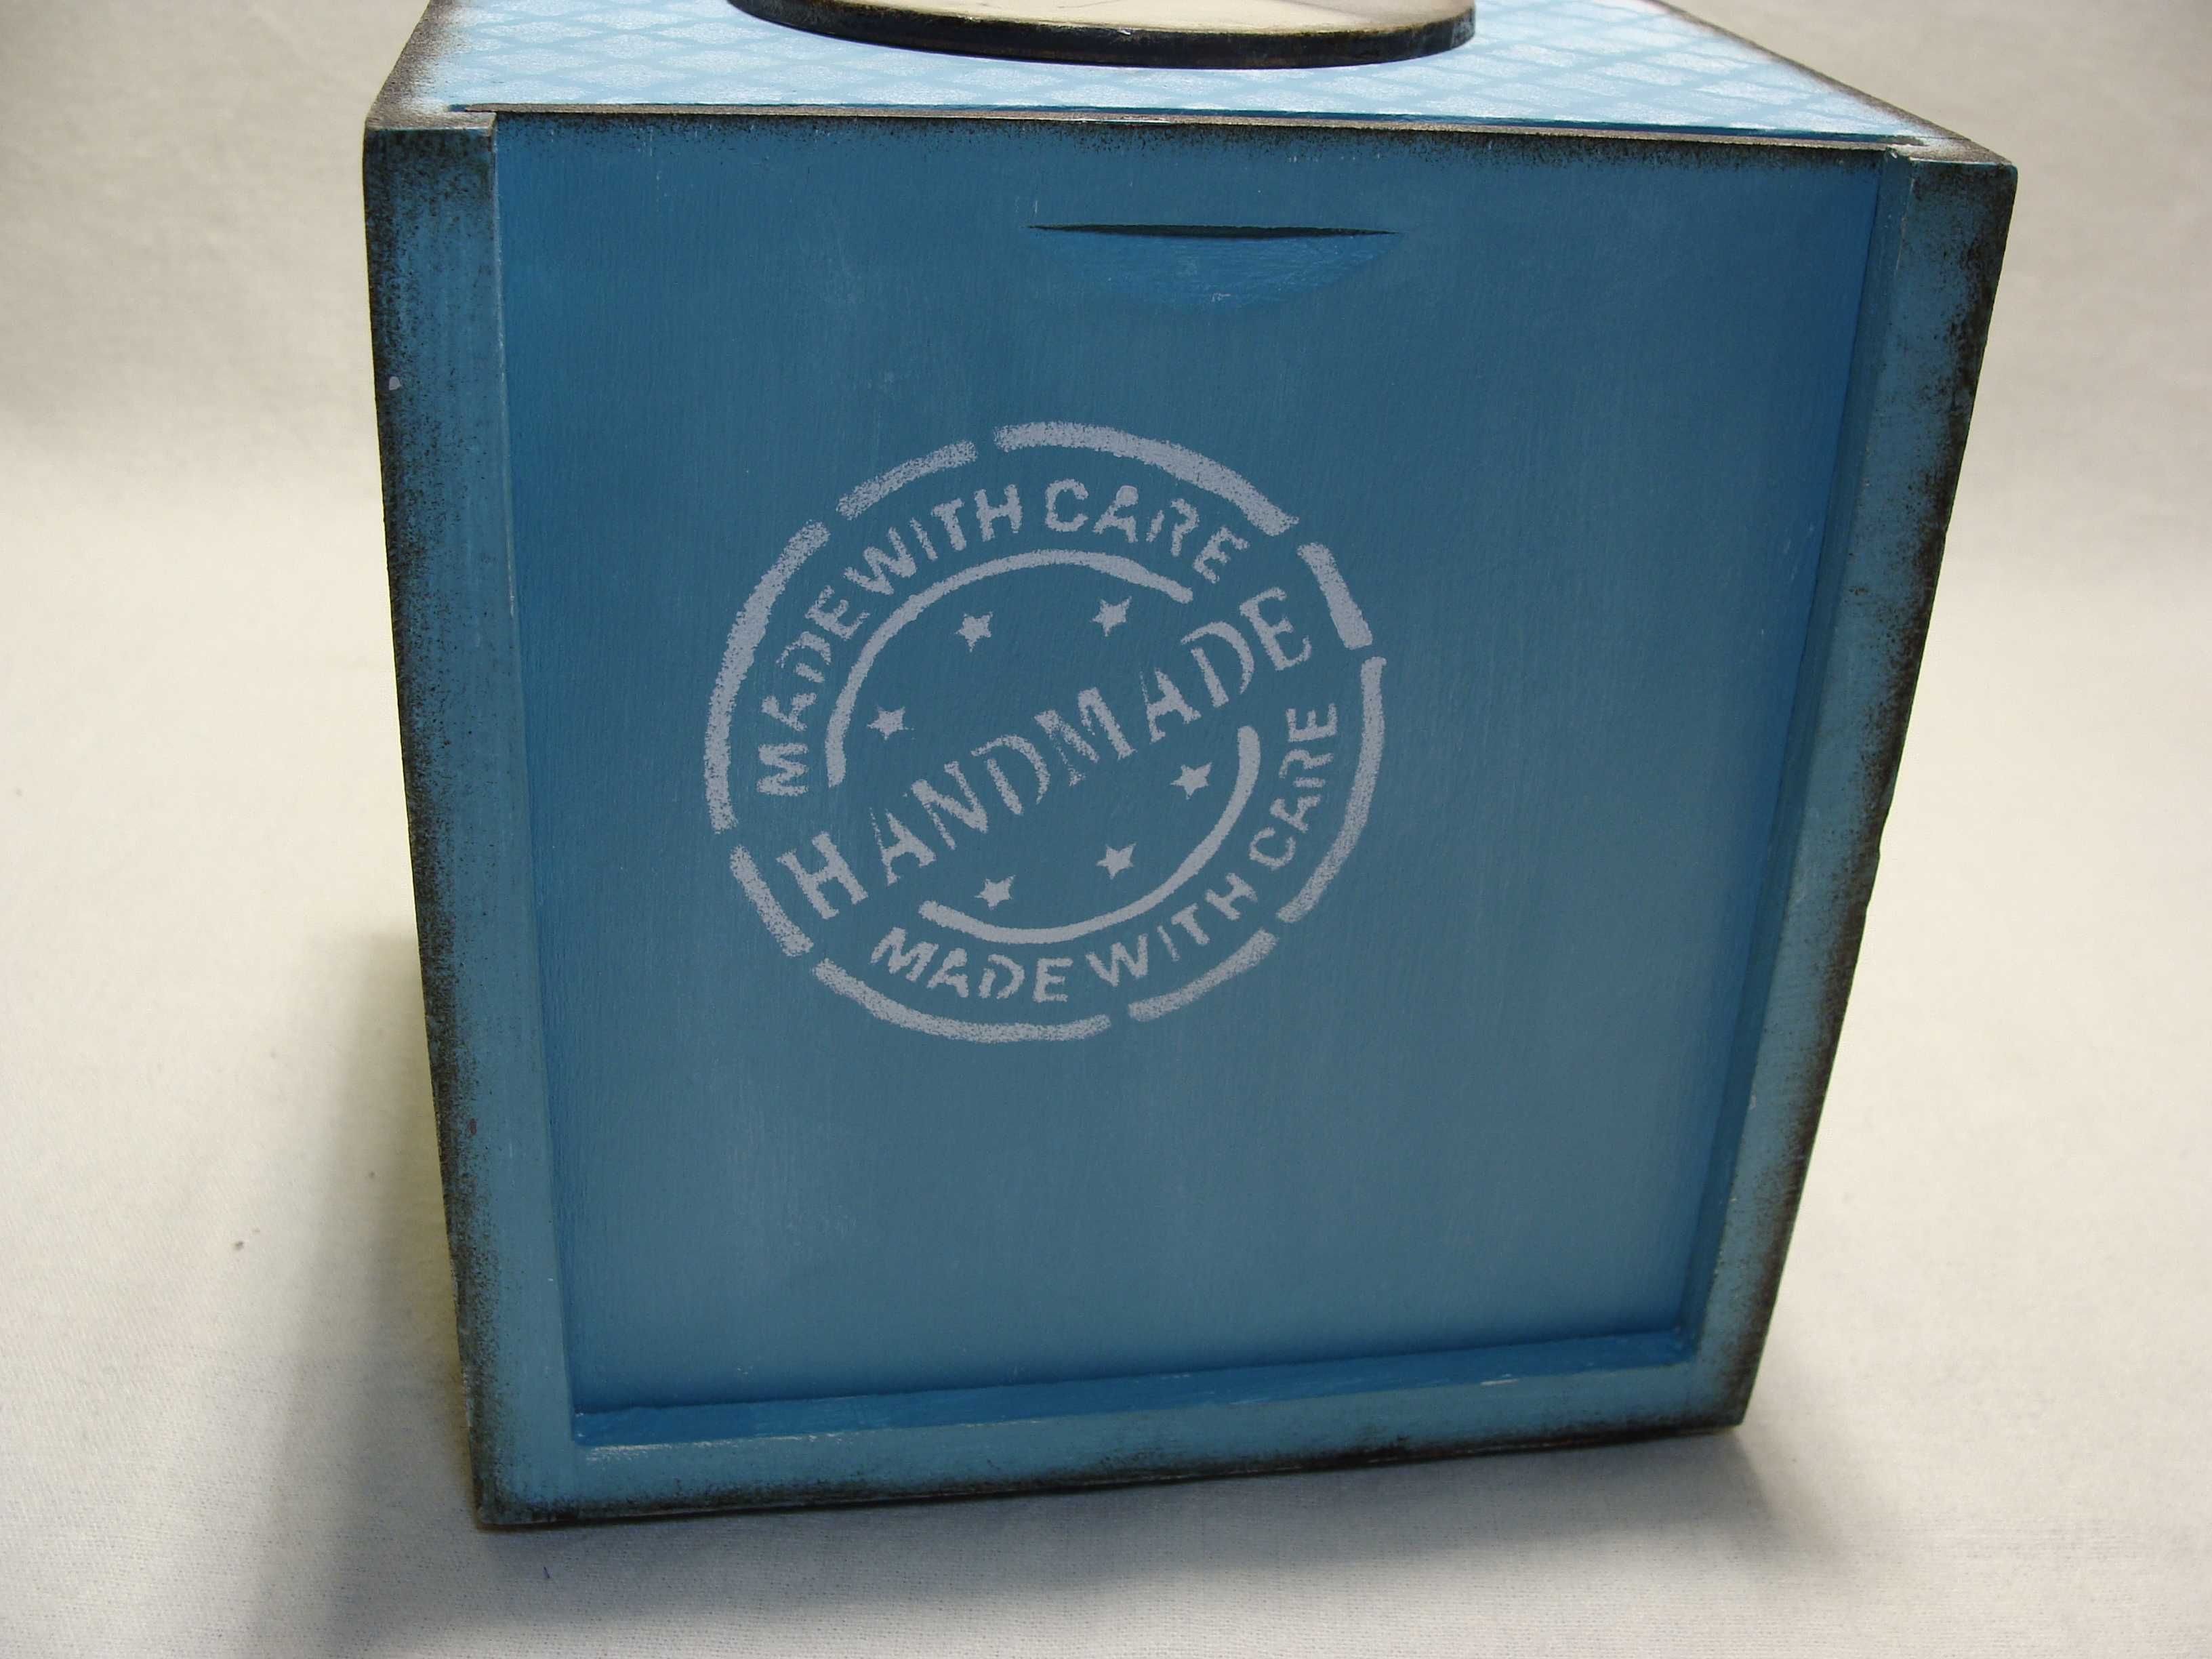 Decoupage pudełko na chusteczki - vintage - retro chustecznik.